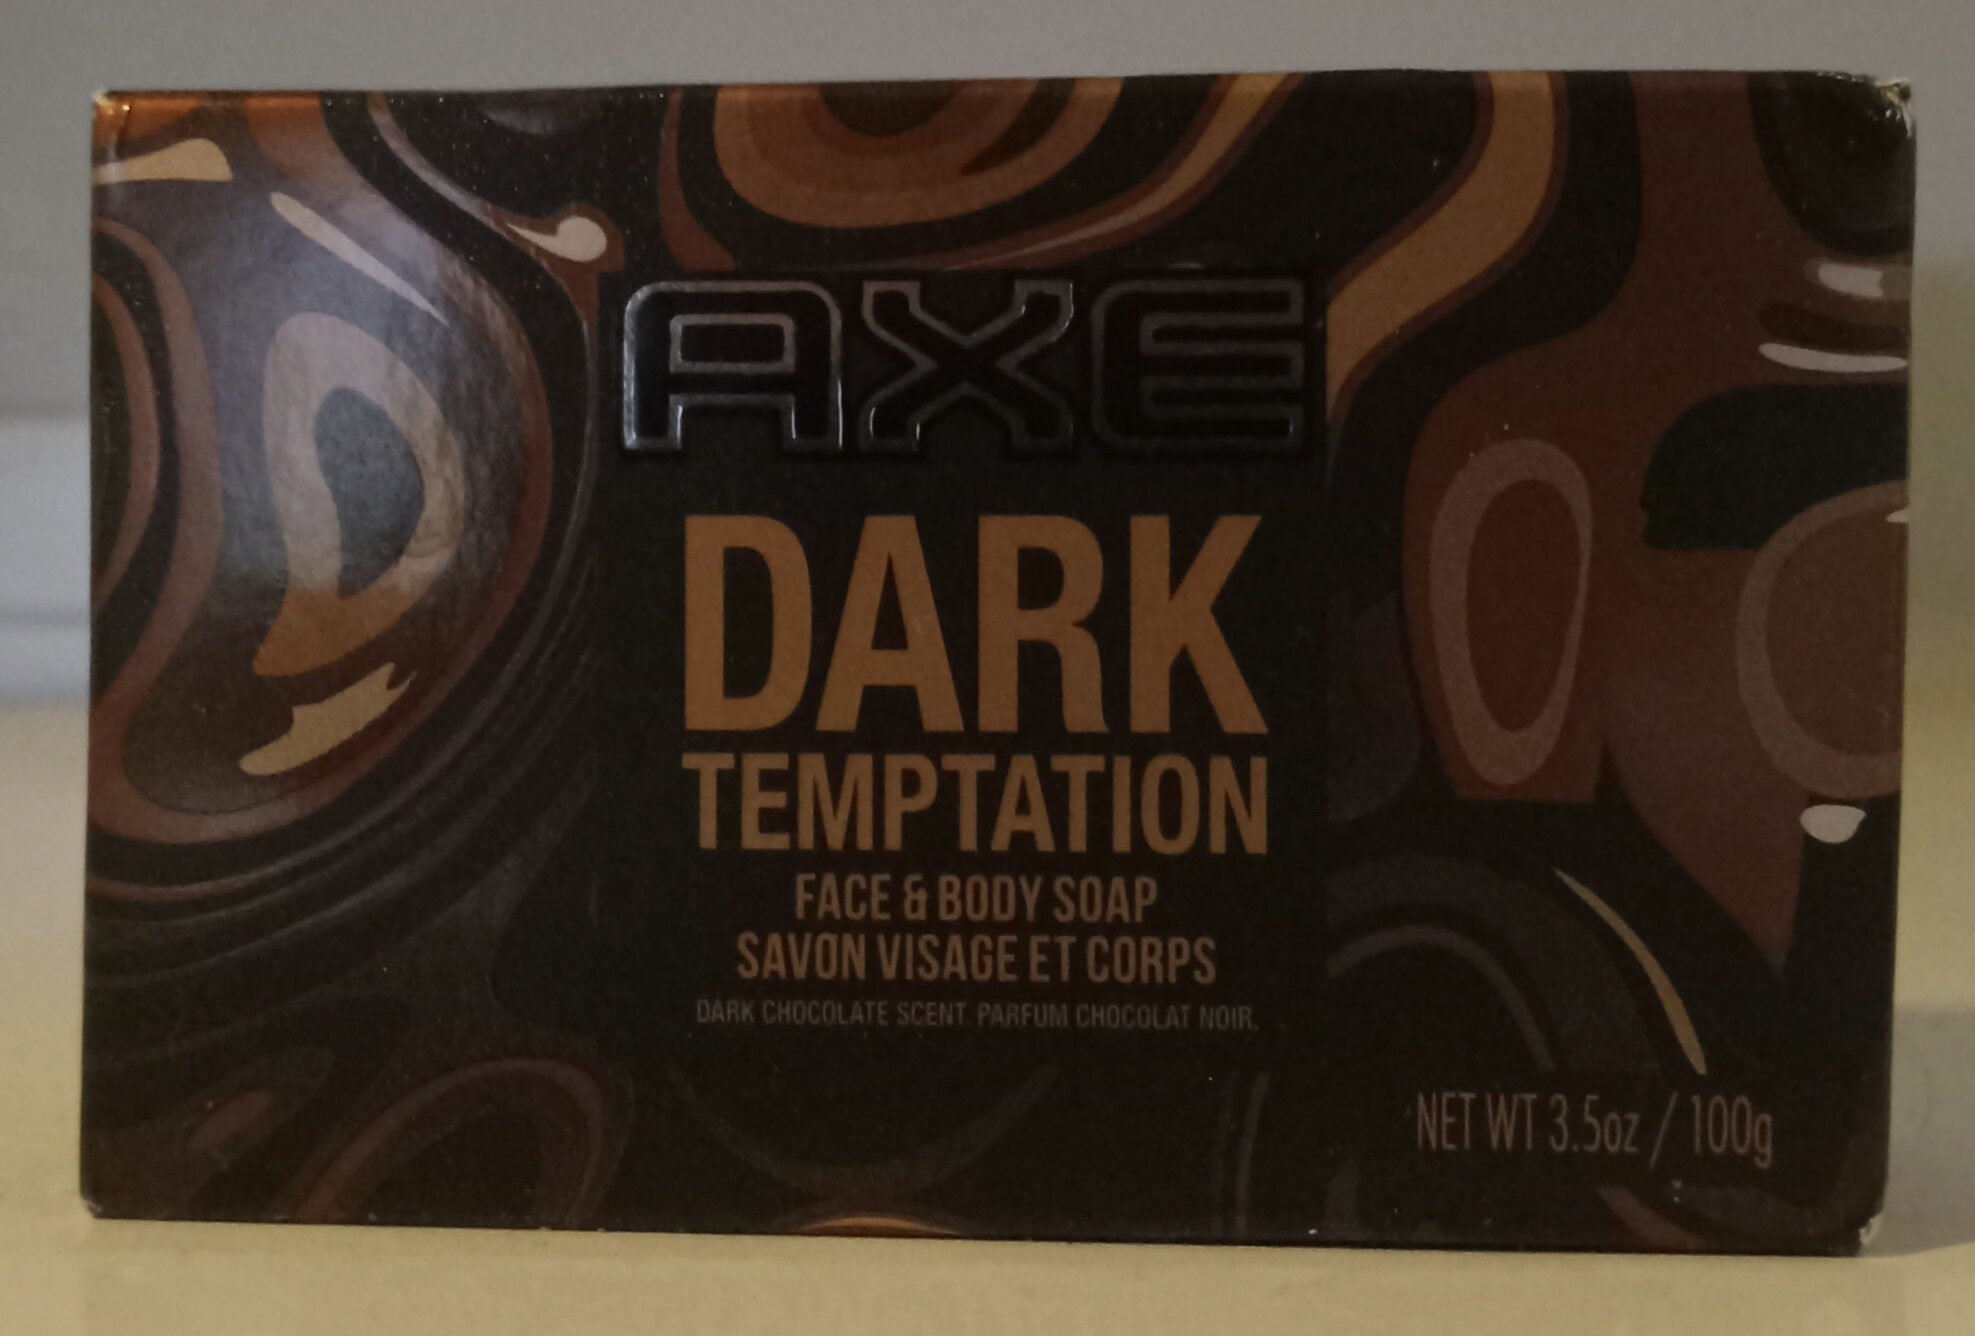 Dark Temptation Face & Body Soap - Produit - en